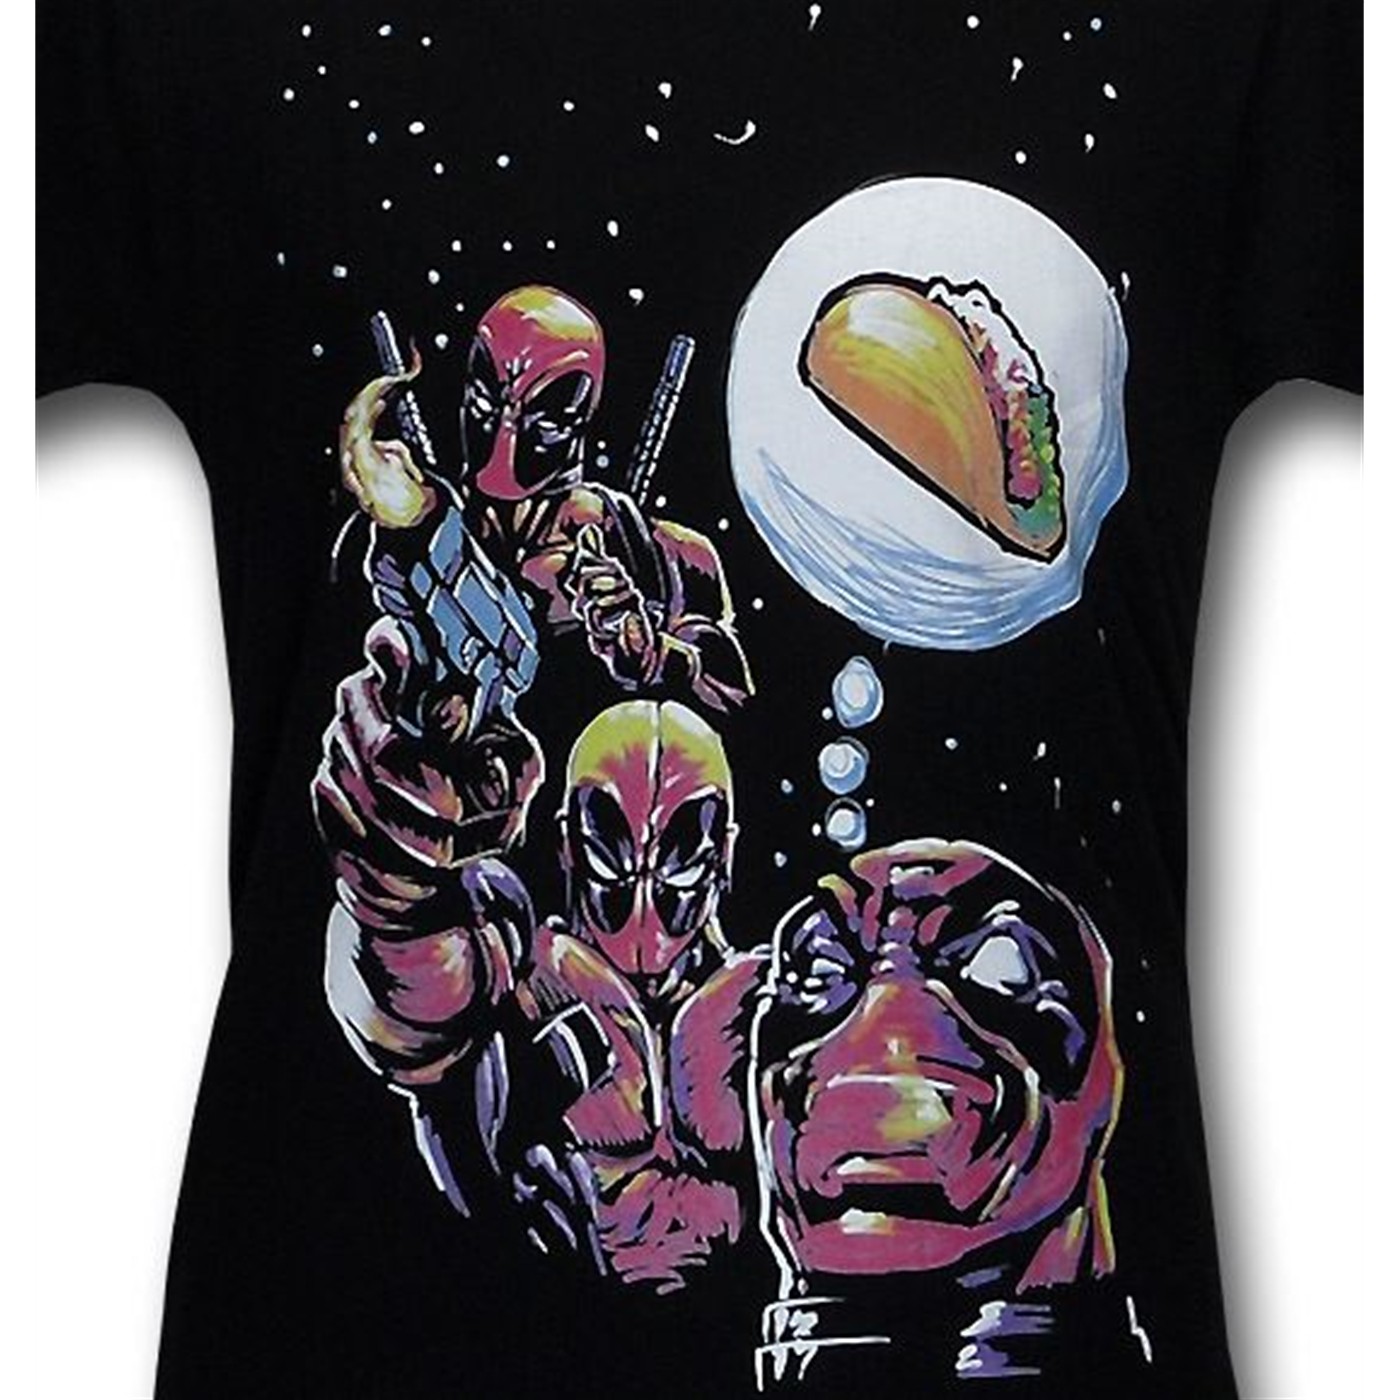 Deadpool Taco Dreams 30 Single T-Shirt